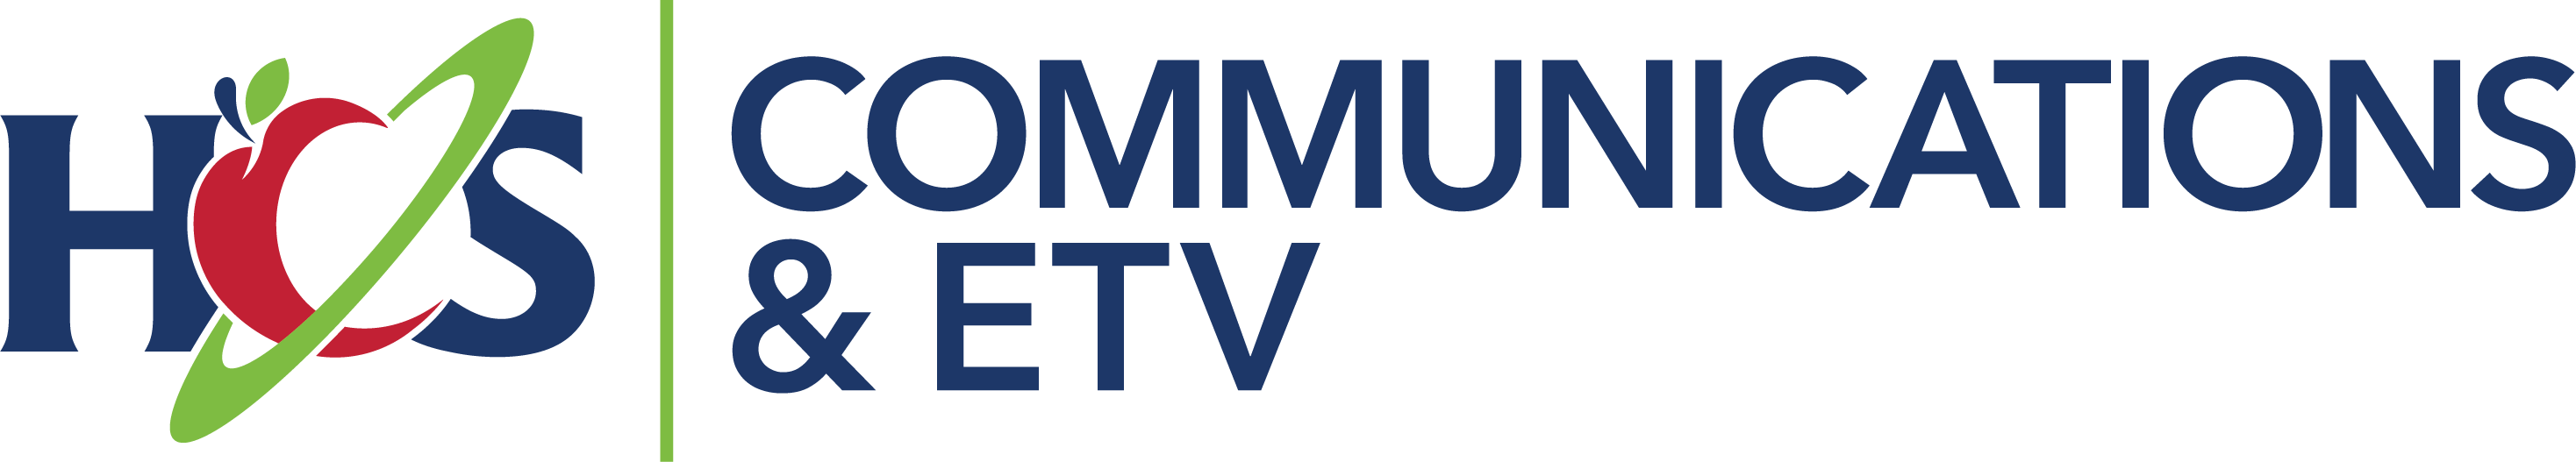 Communications & ETV logo